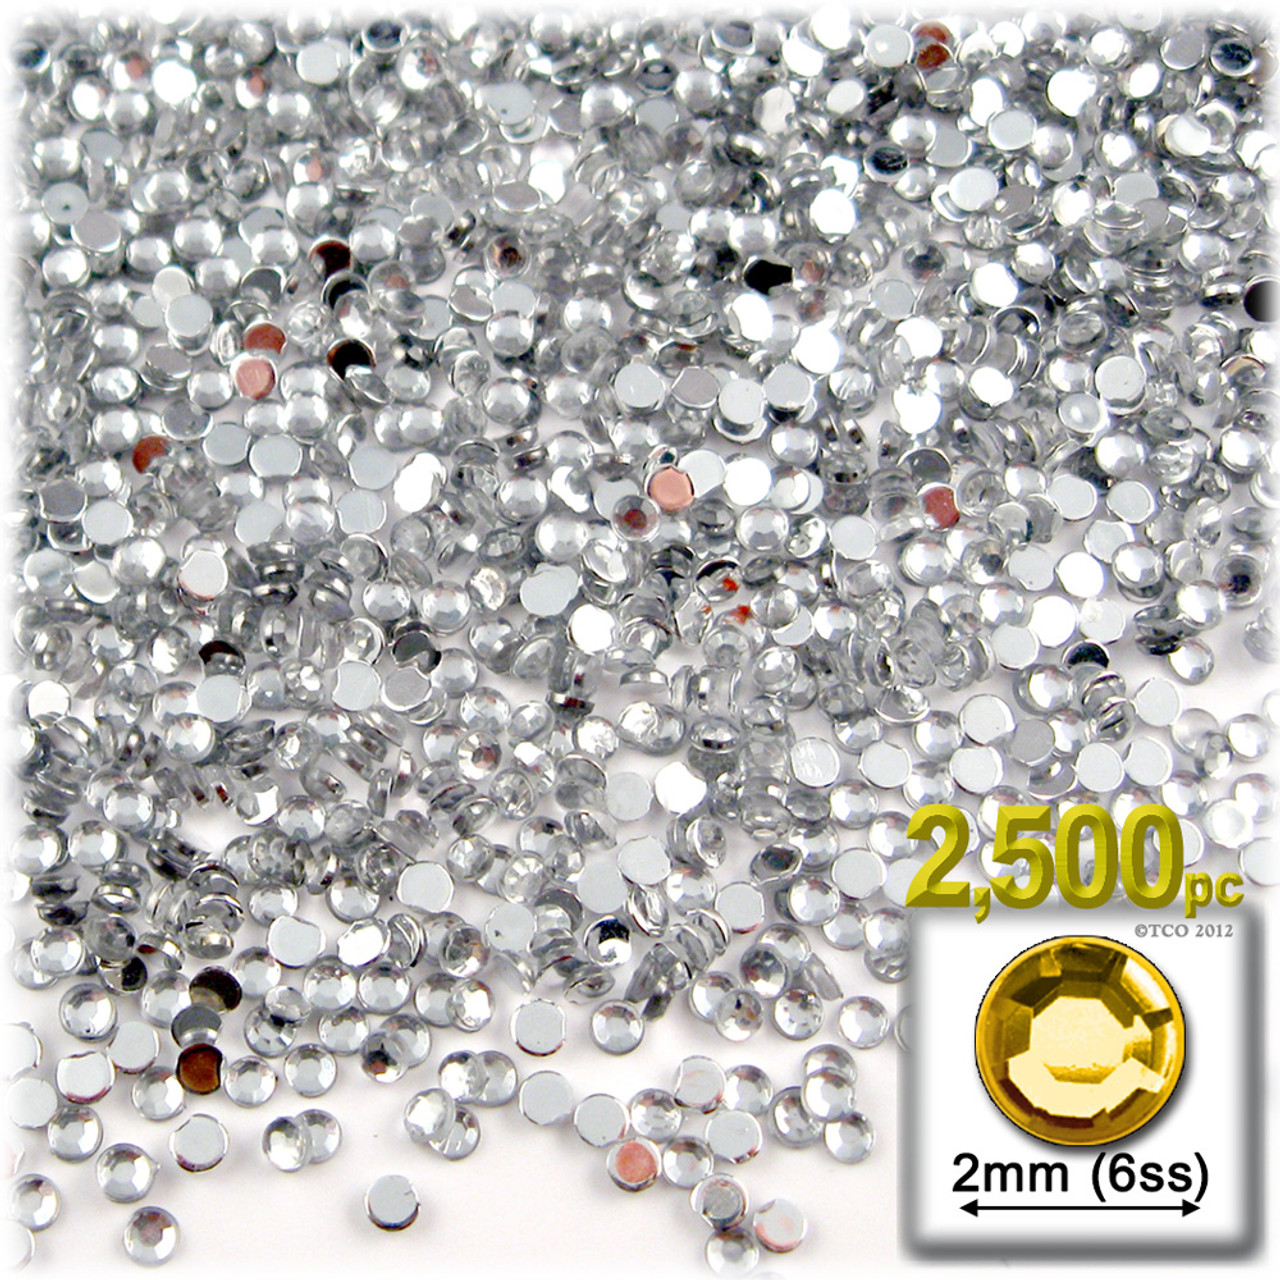 Metallic Gold KRAFTY KOKONUT® Grade-A Flat-Back Glass Rhinestones Size